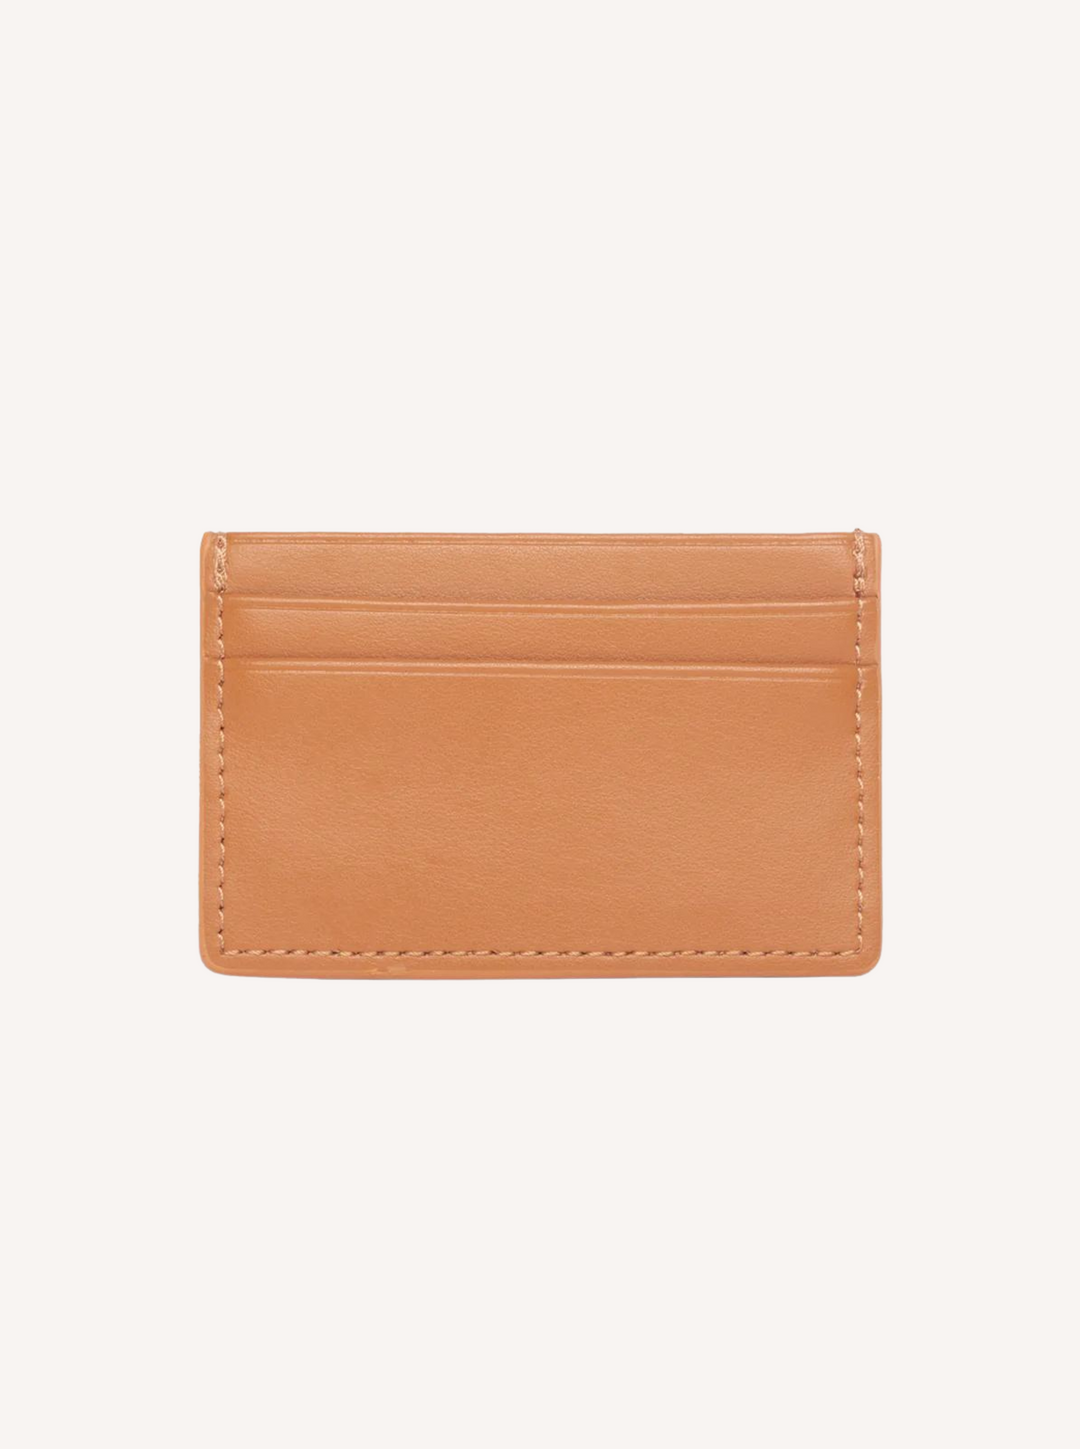 Ela Apple Leather Card Holder - Tan